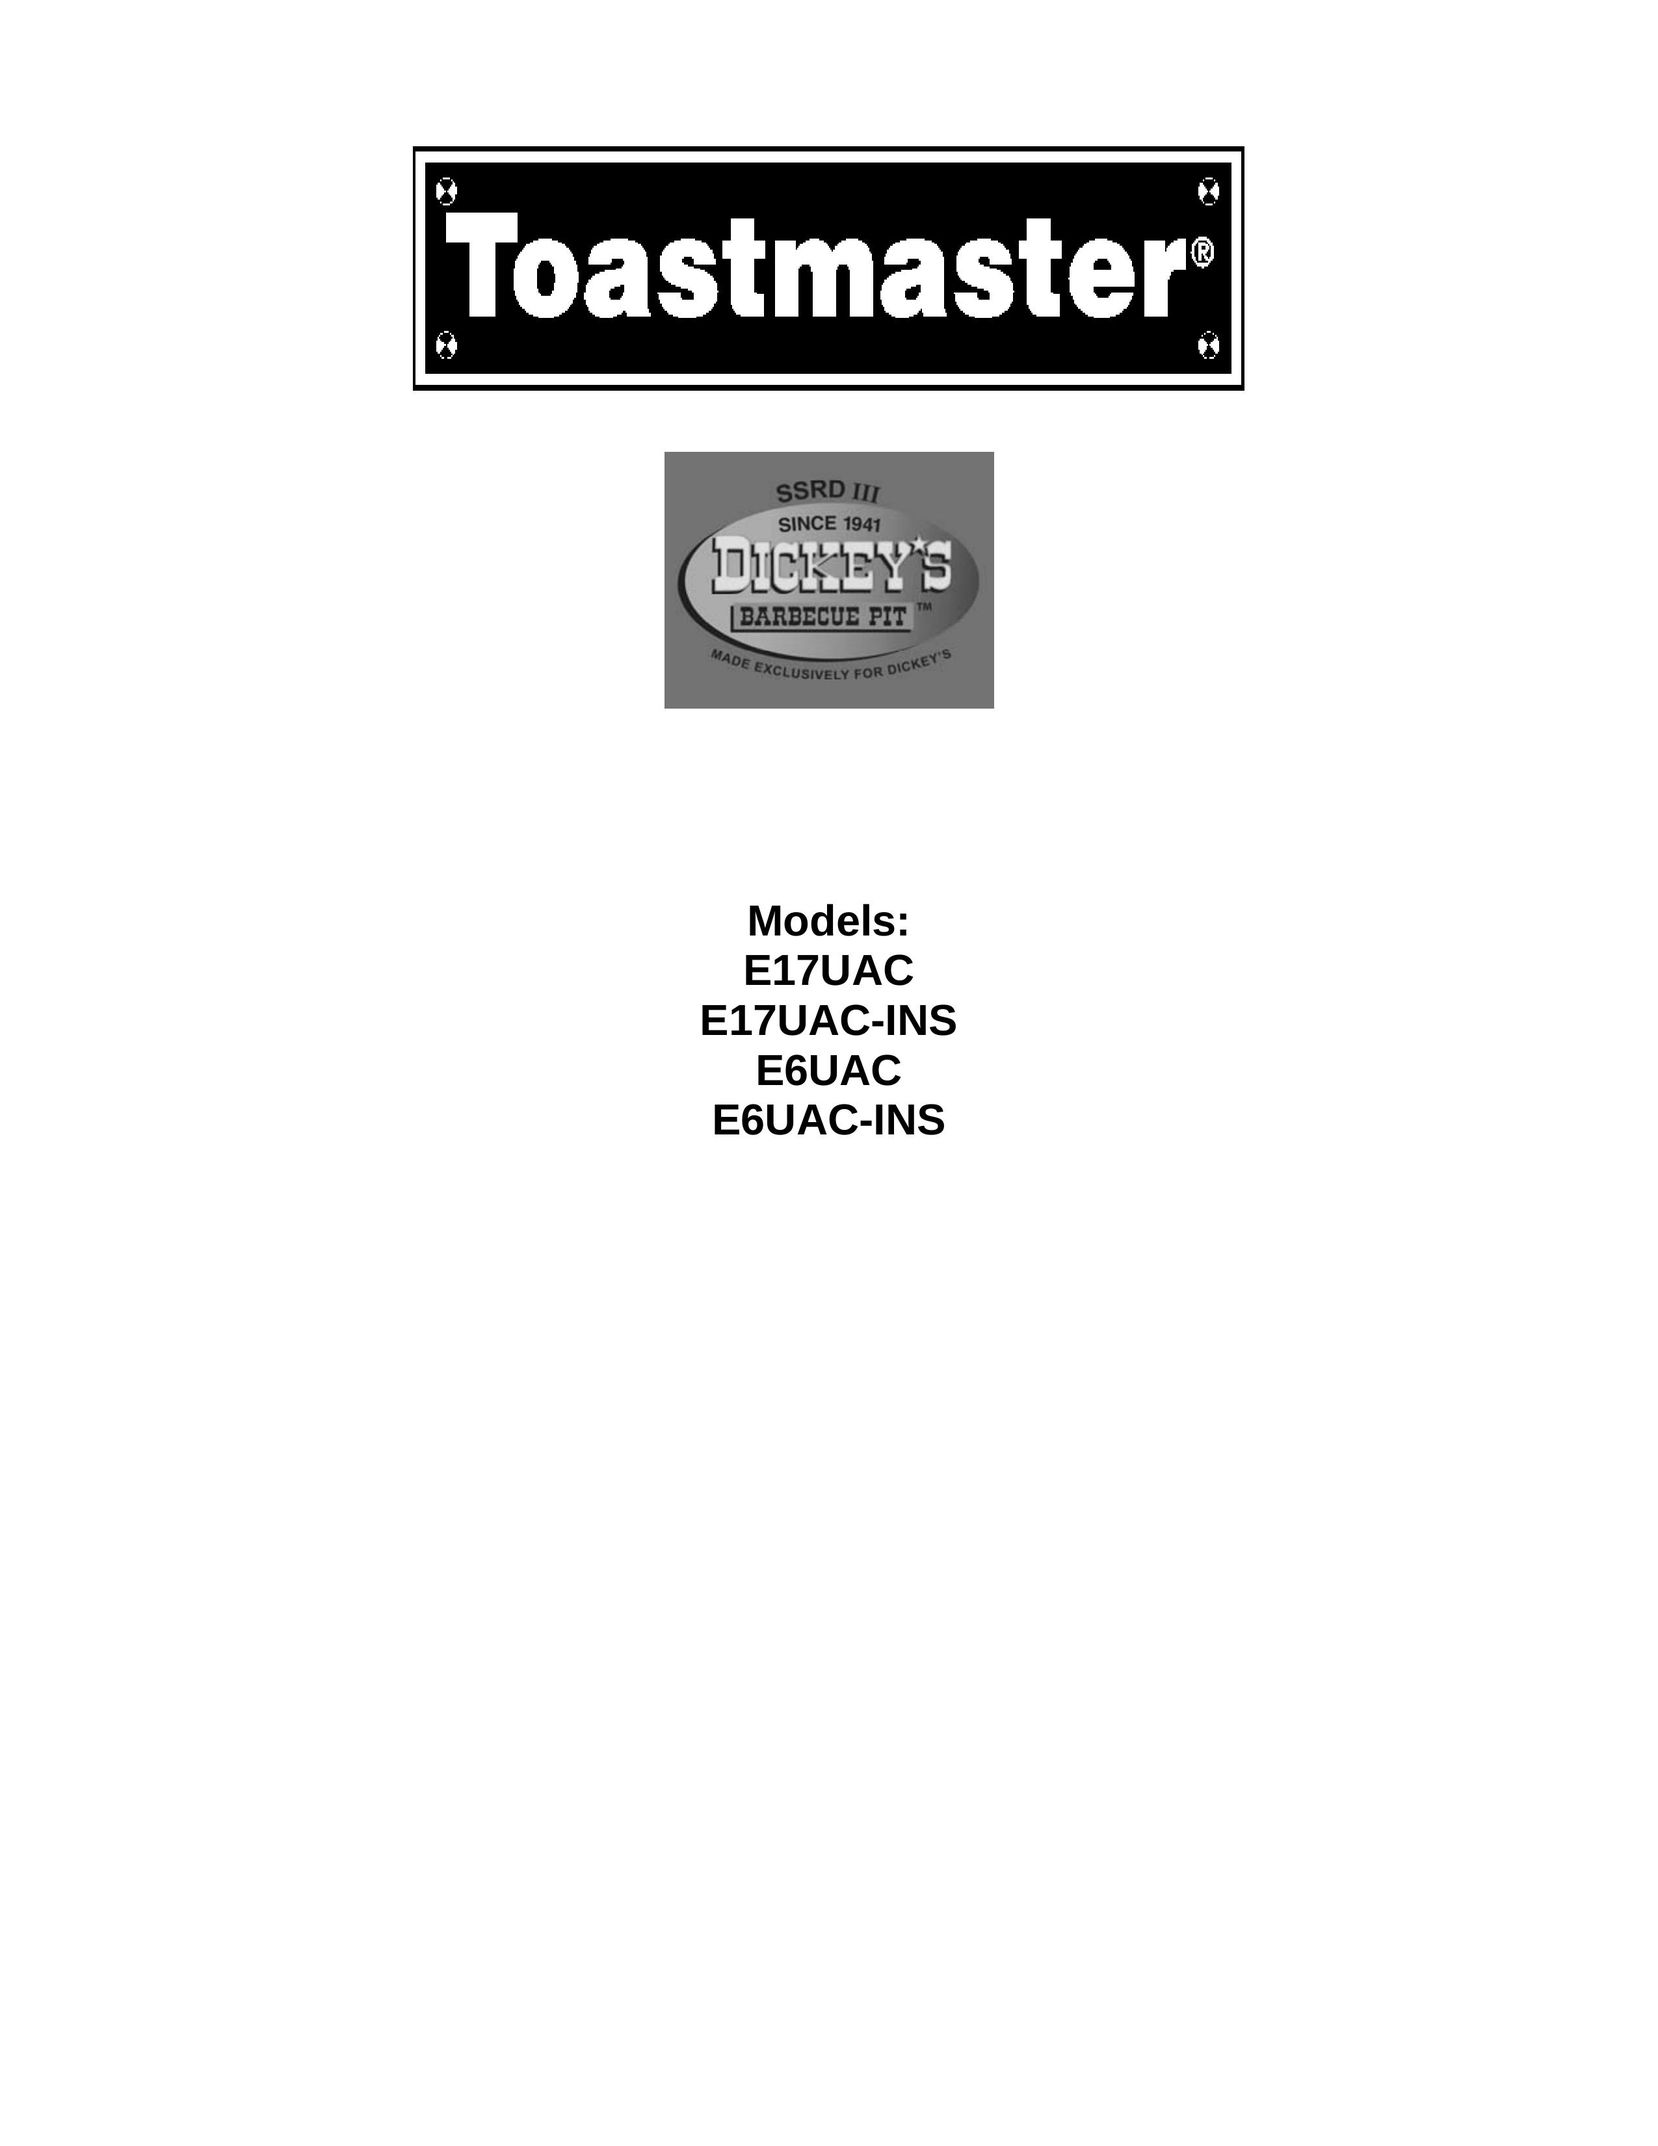 Toastmaster E6UAC-INS Food Warmer User Manual